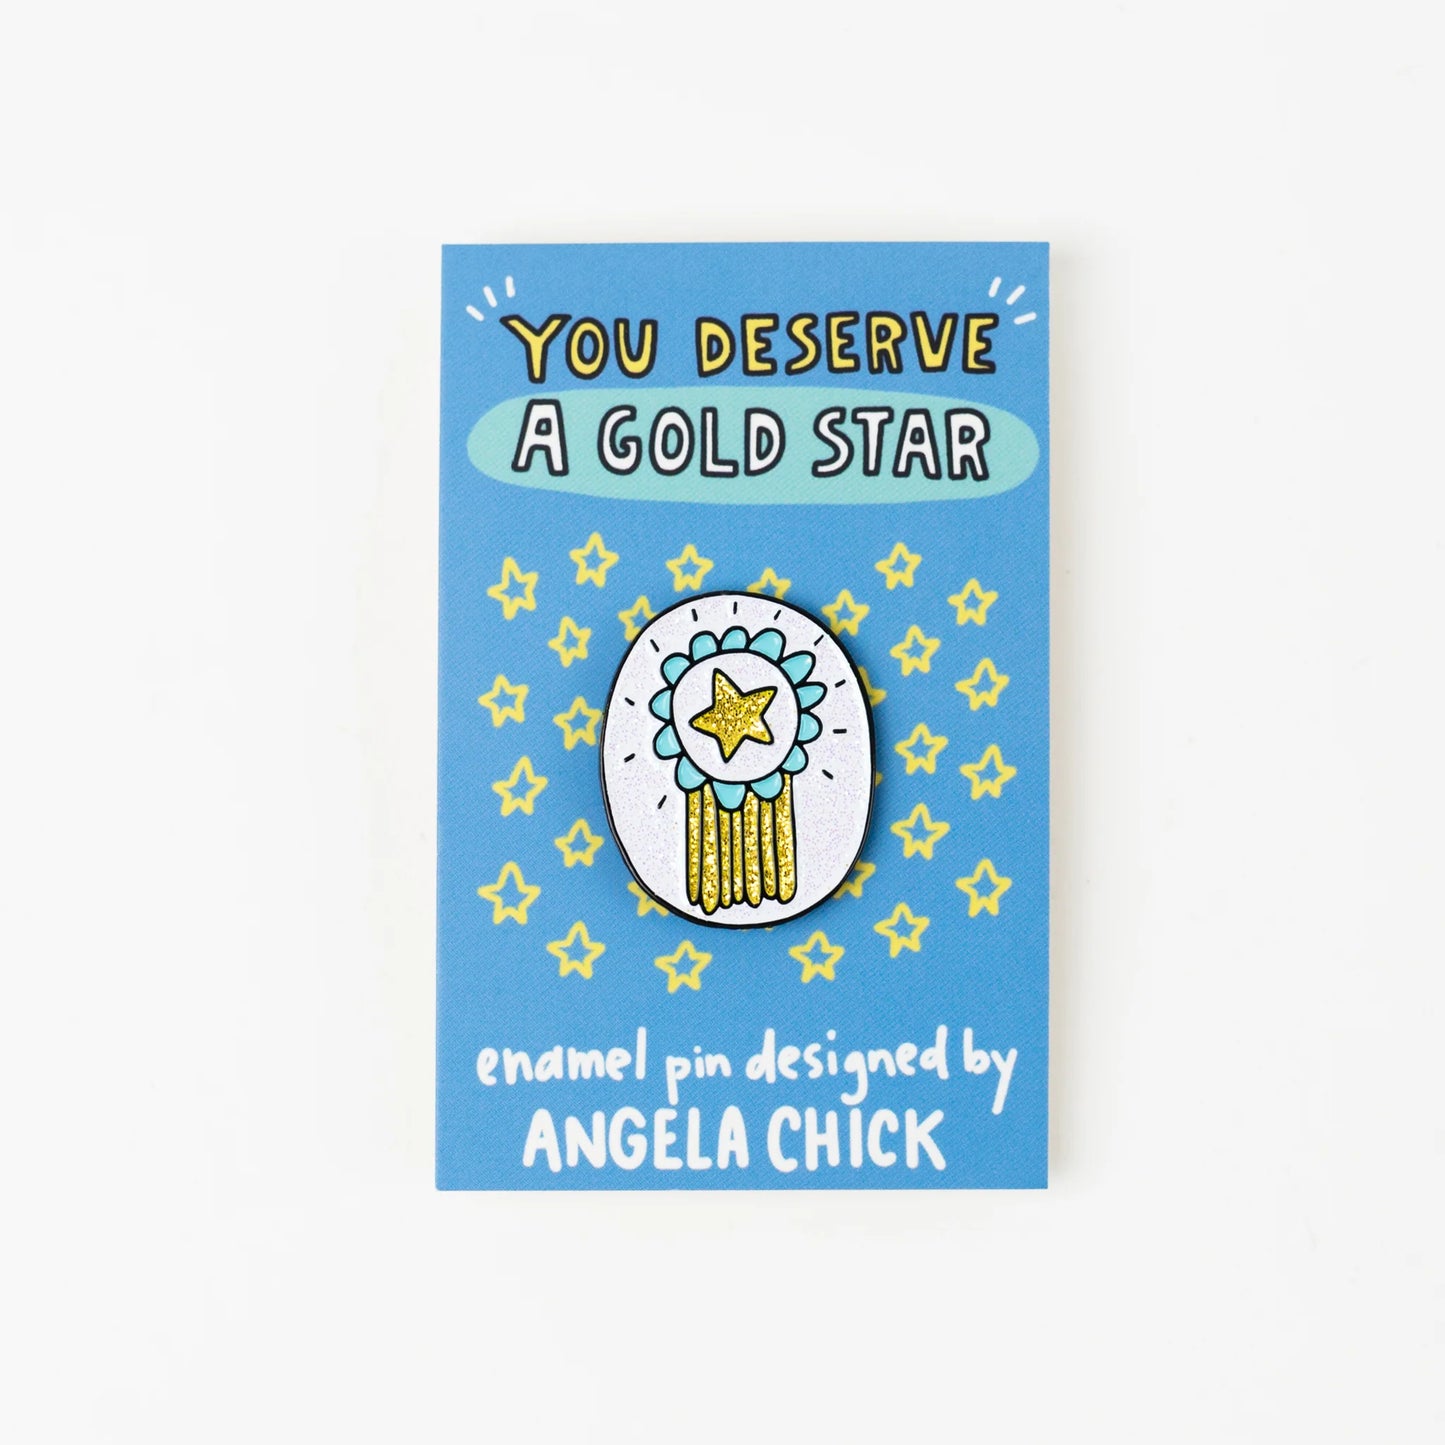 Angela Chick - "You deserve a gold star" Enamel Pin